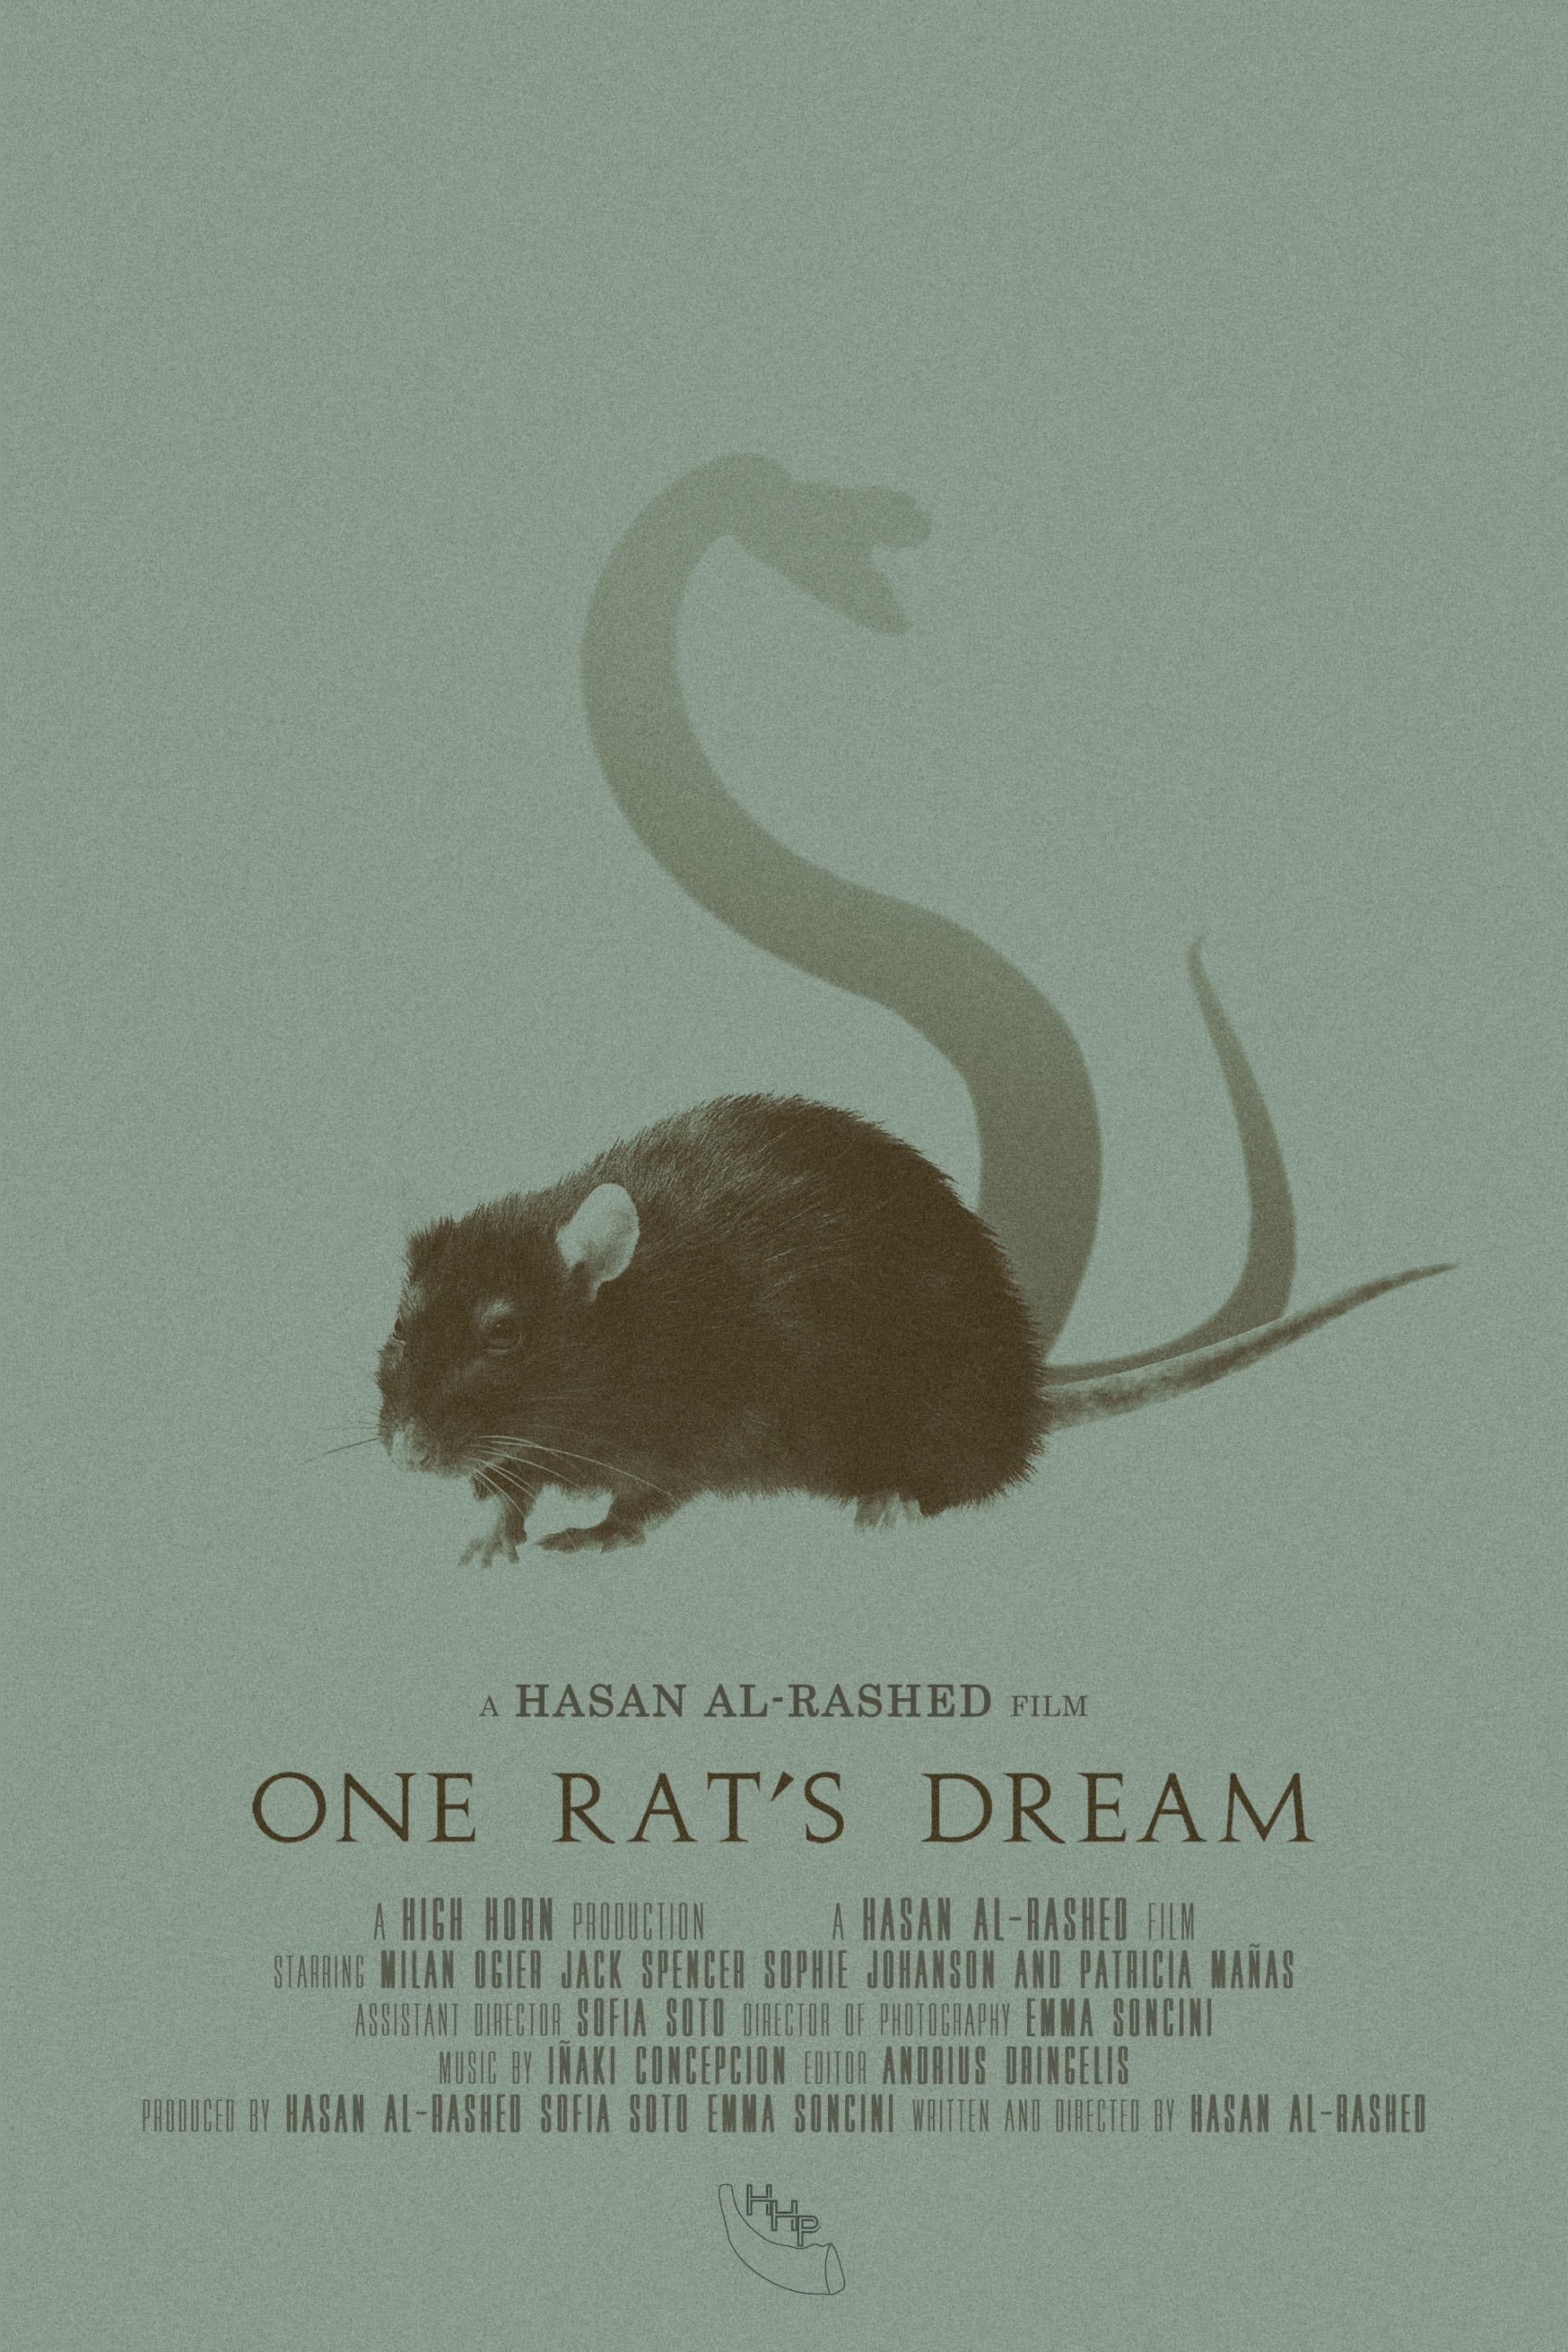 One Rat's Dream